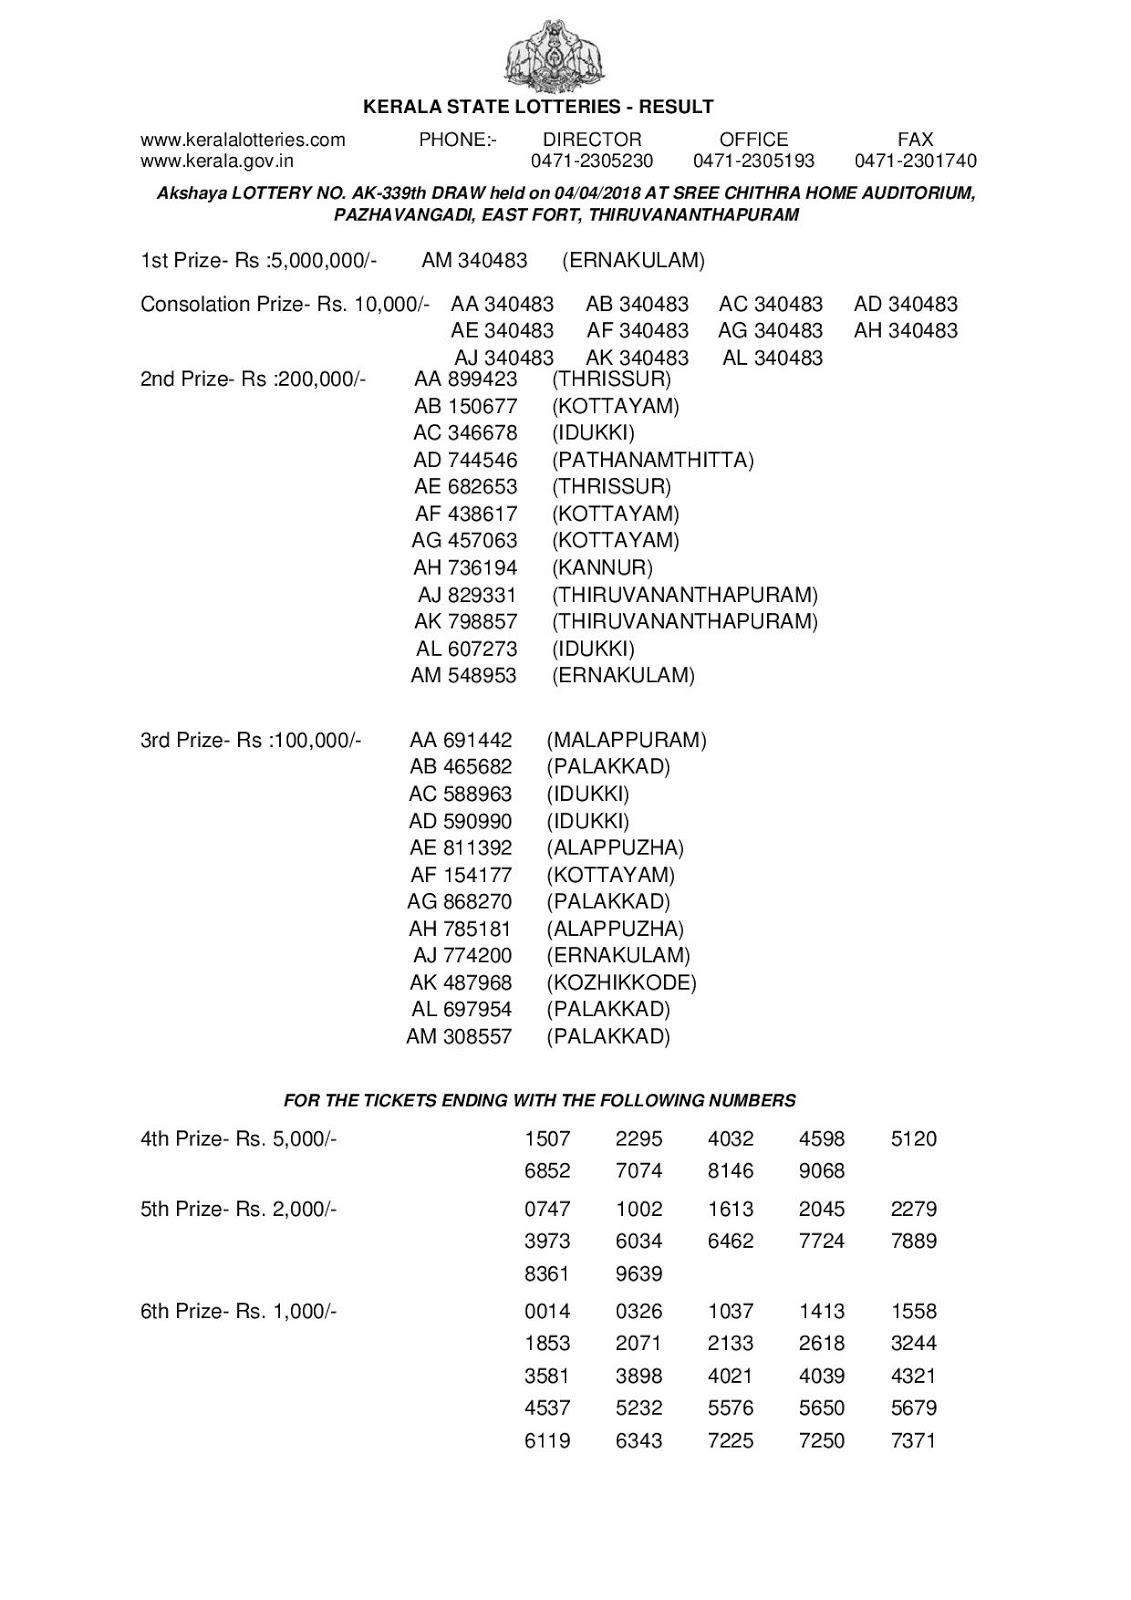 Kerala Lottery Result 04.04.2018 Akshaya AK-339 Lottery Results Official PDF